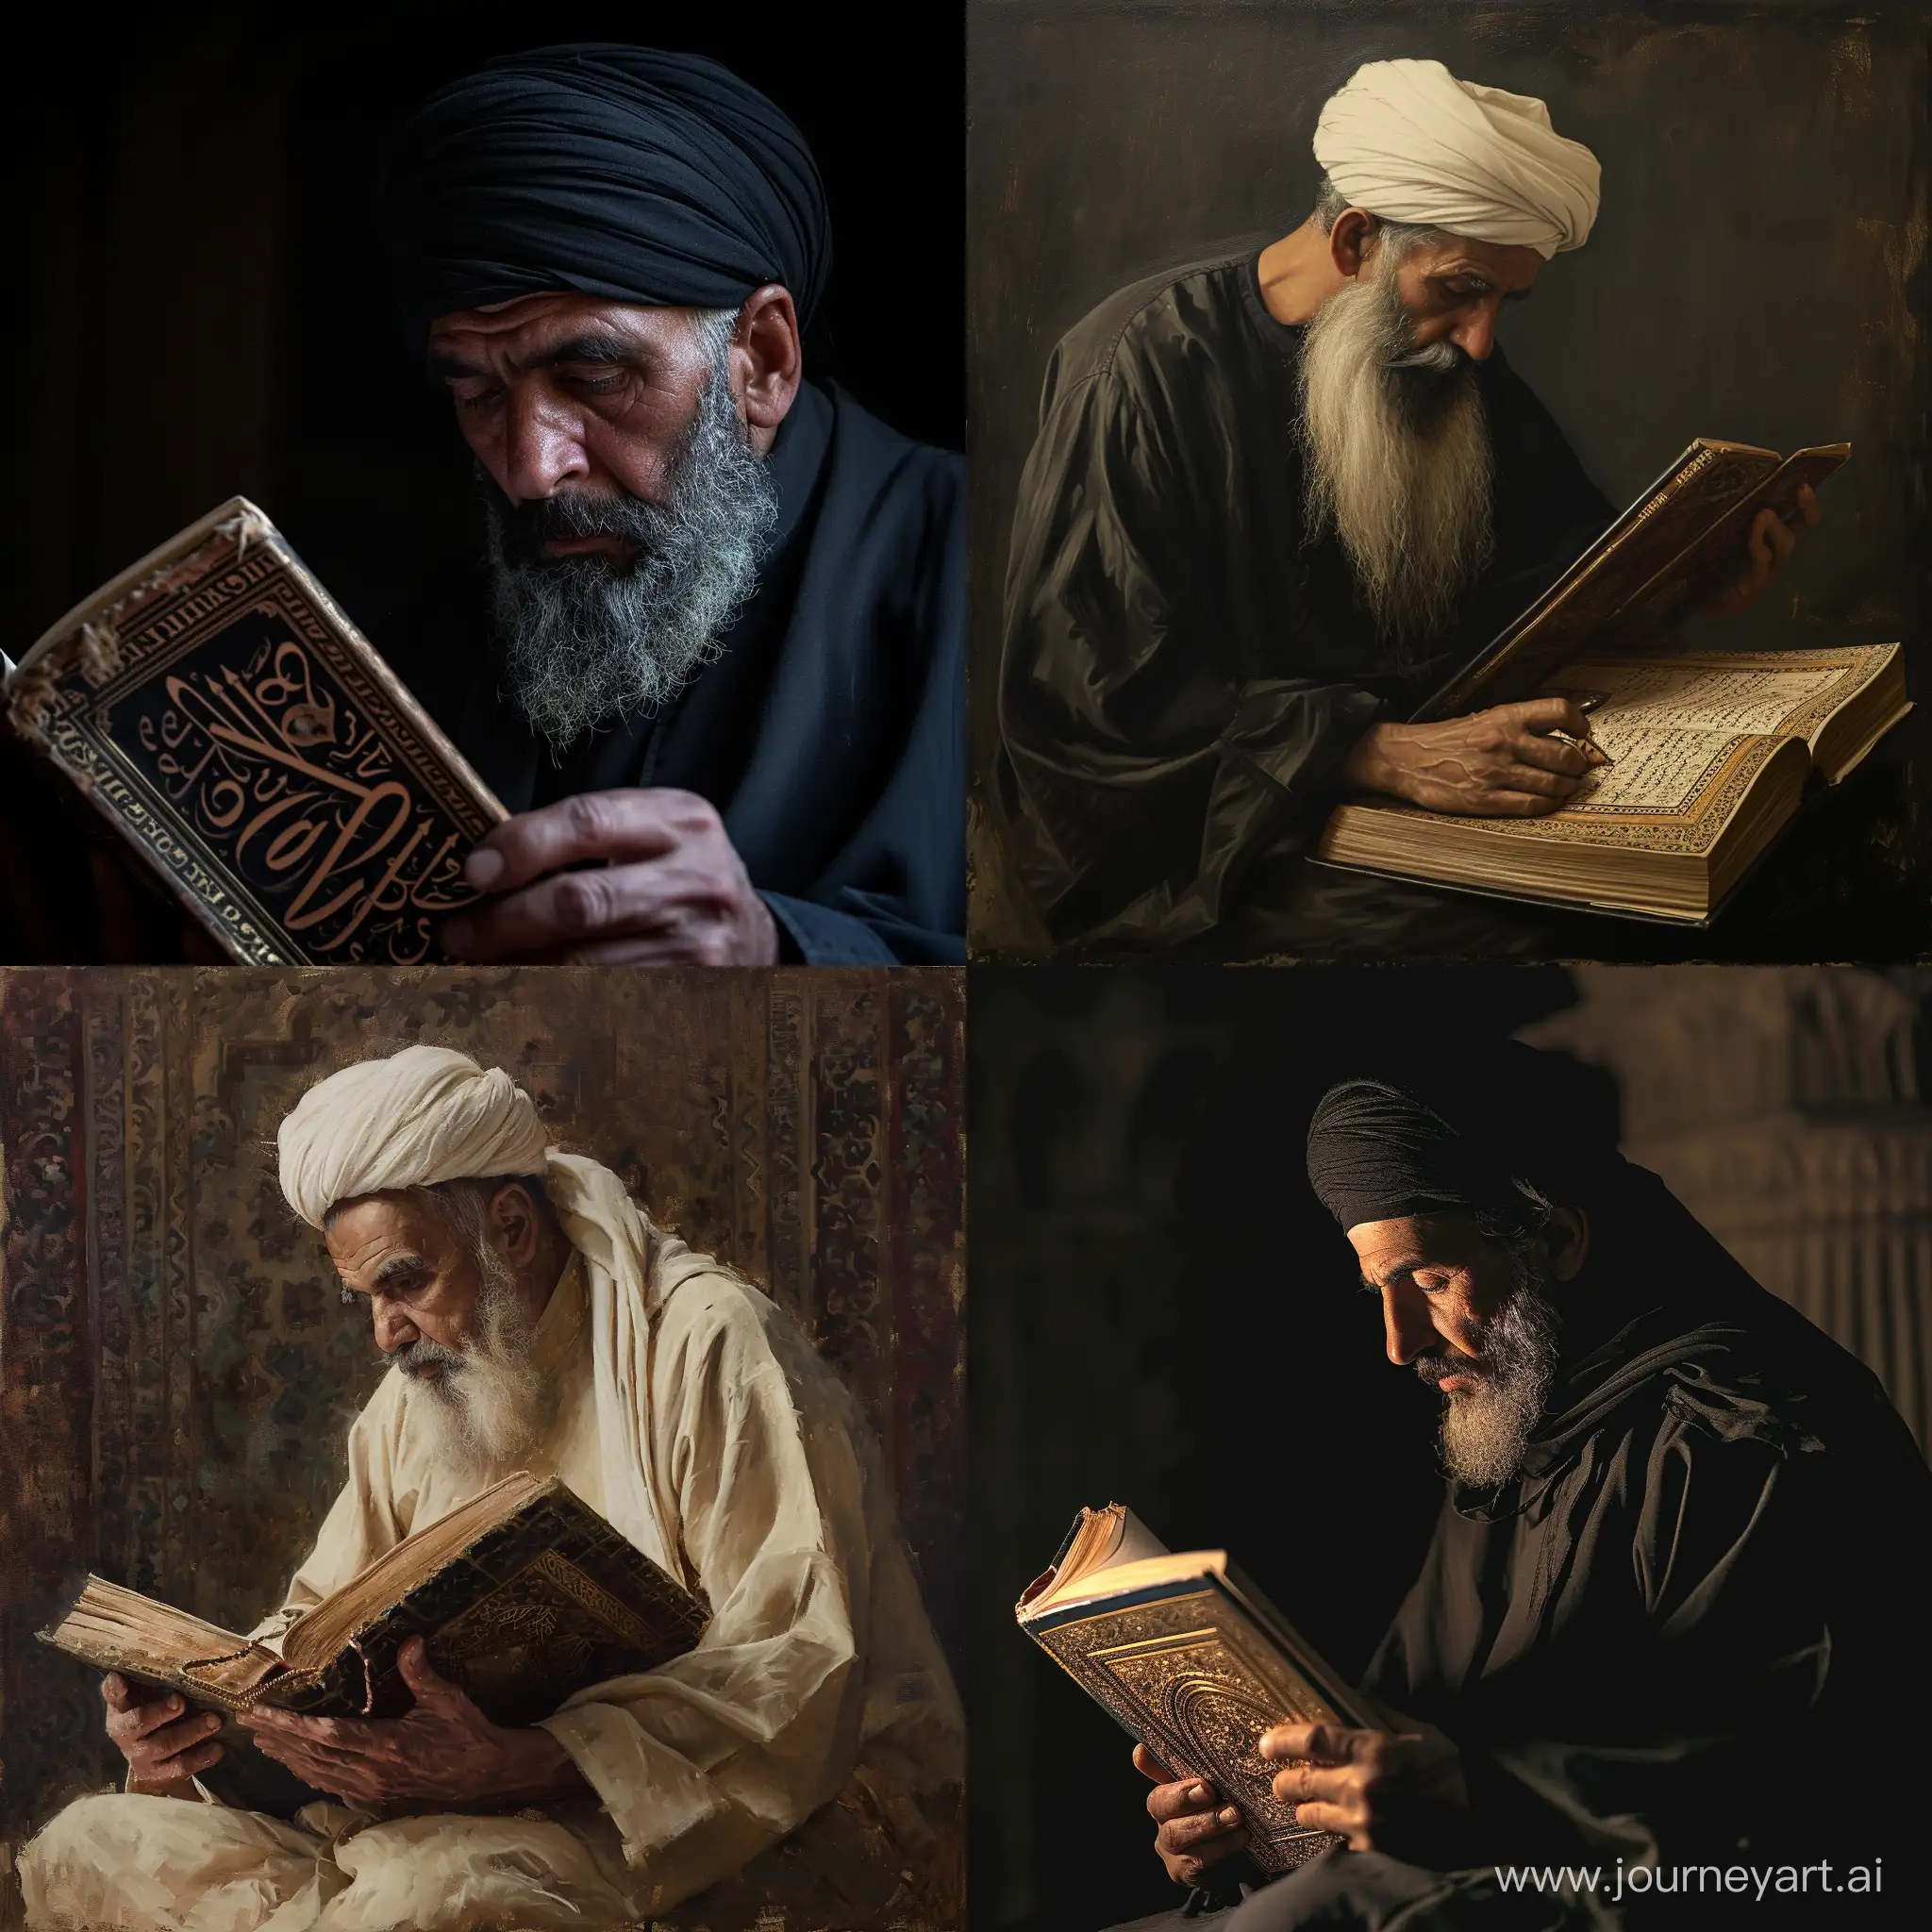 A Sufi reads a mosque book